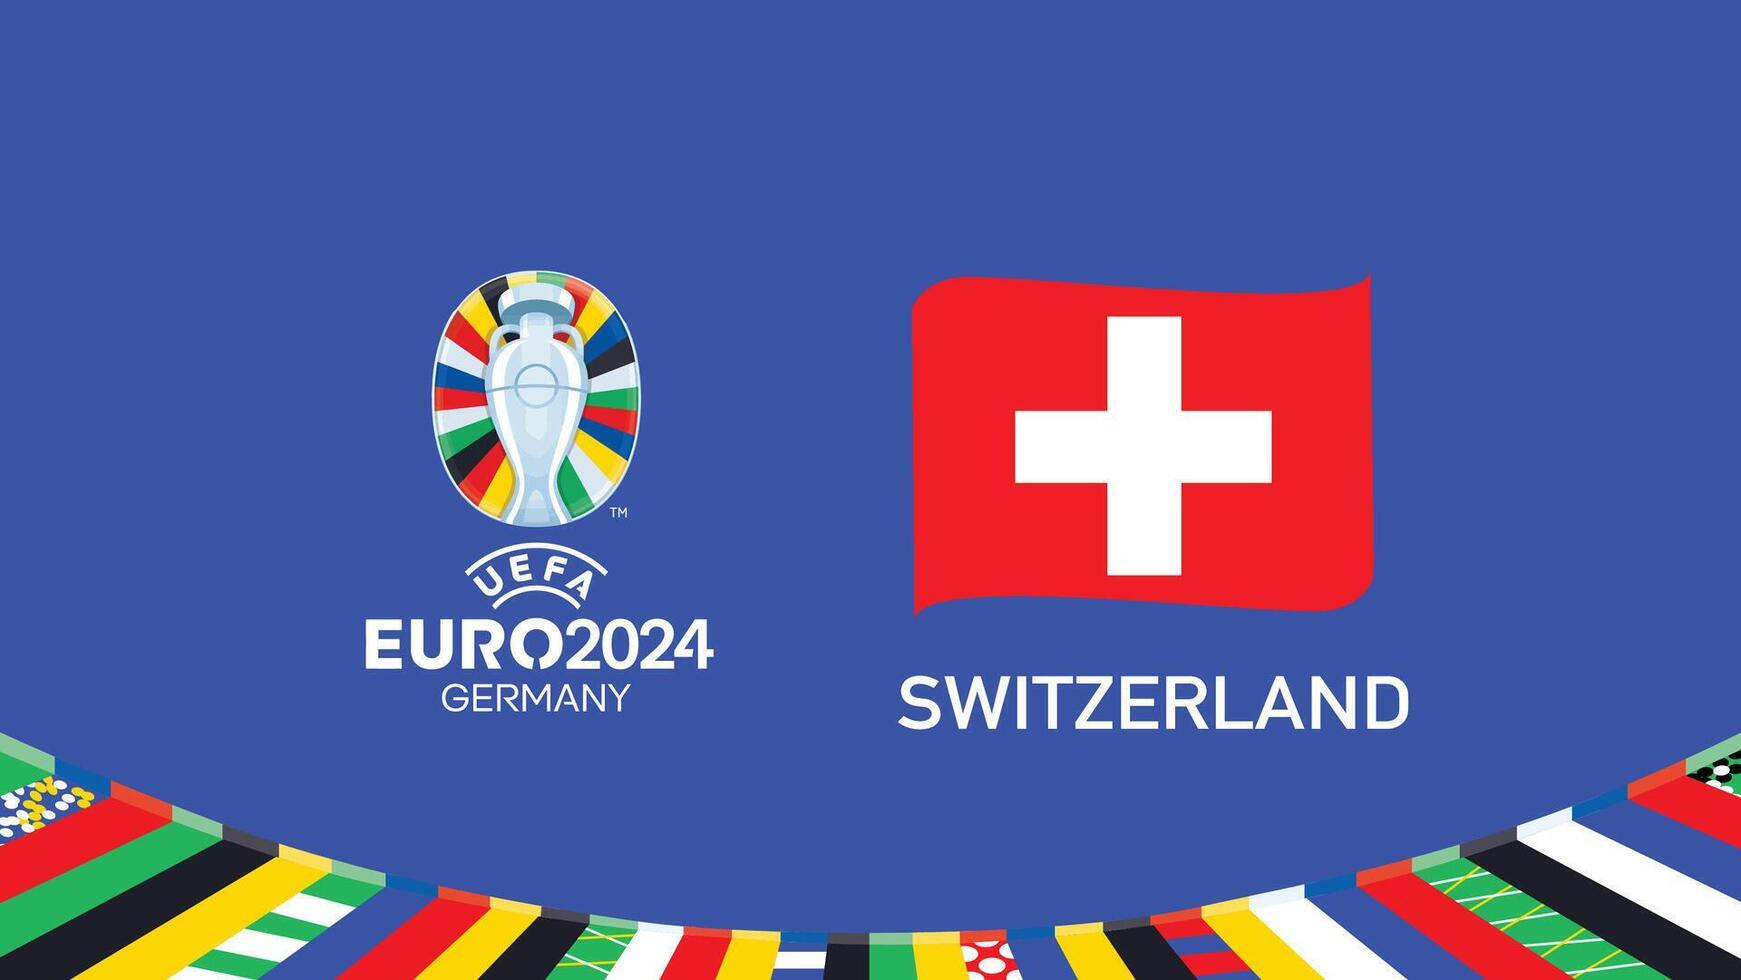 Euro 2024 Switzerland Emblem Ribbon Teams Design With Official Symbol Logo Abstract Countries European Football Illustration vector